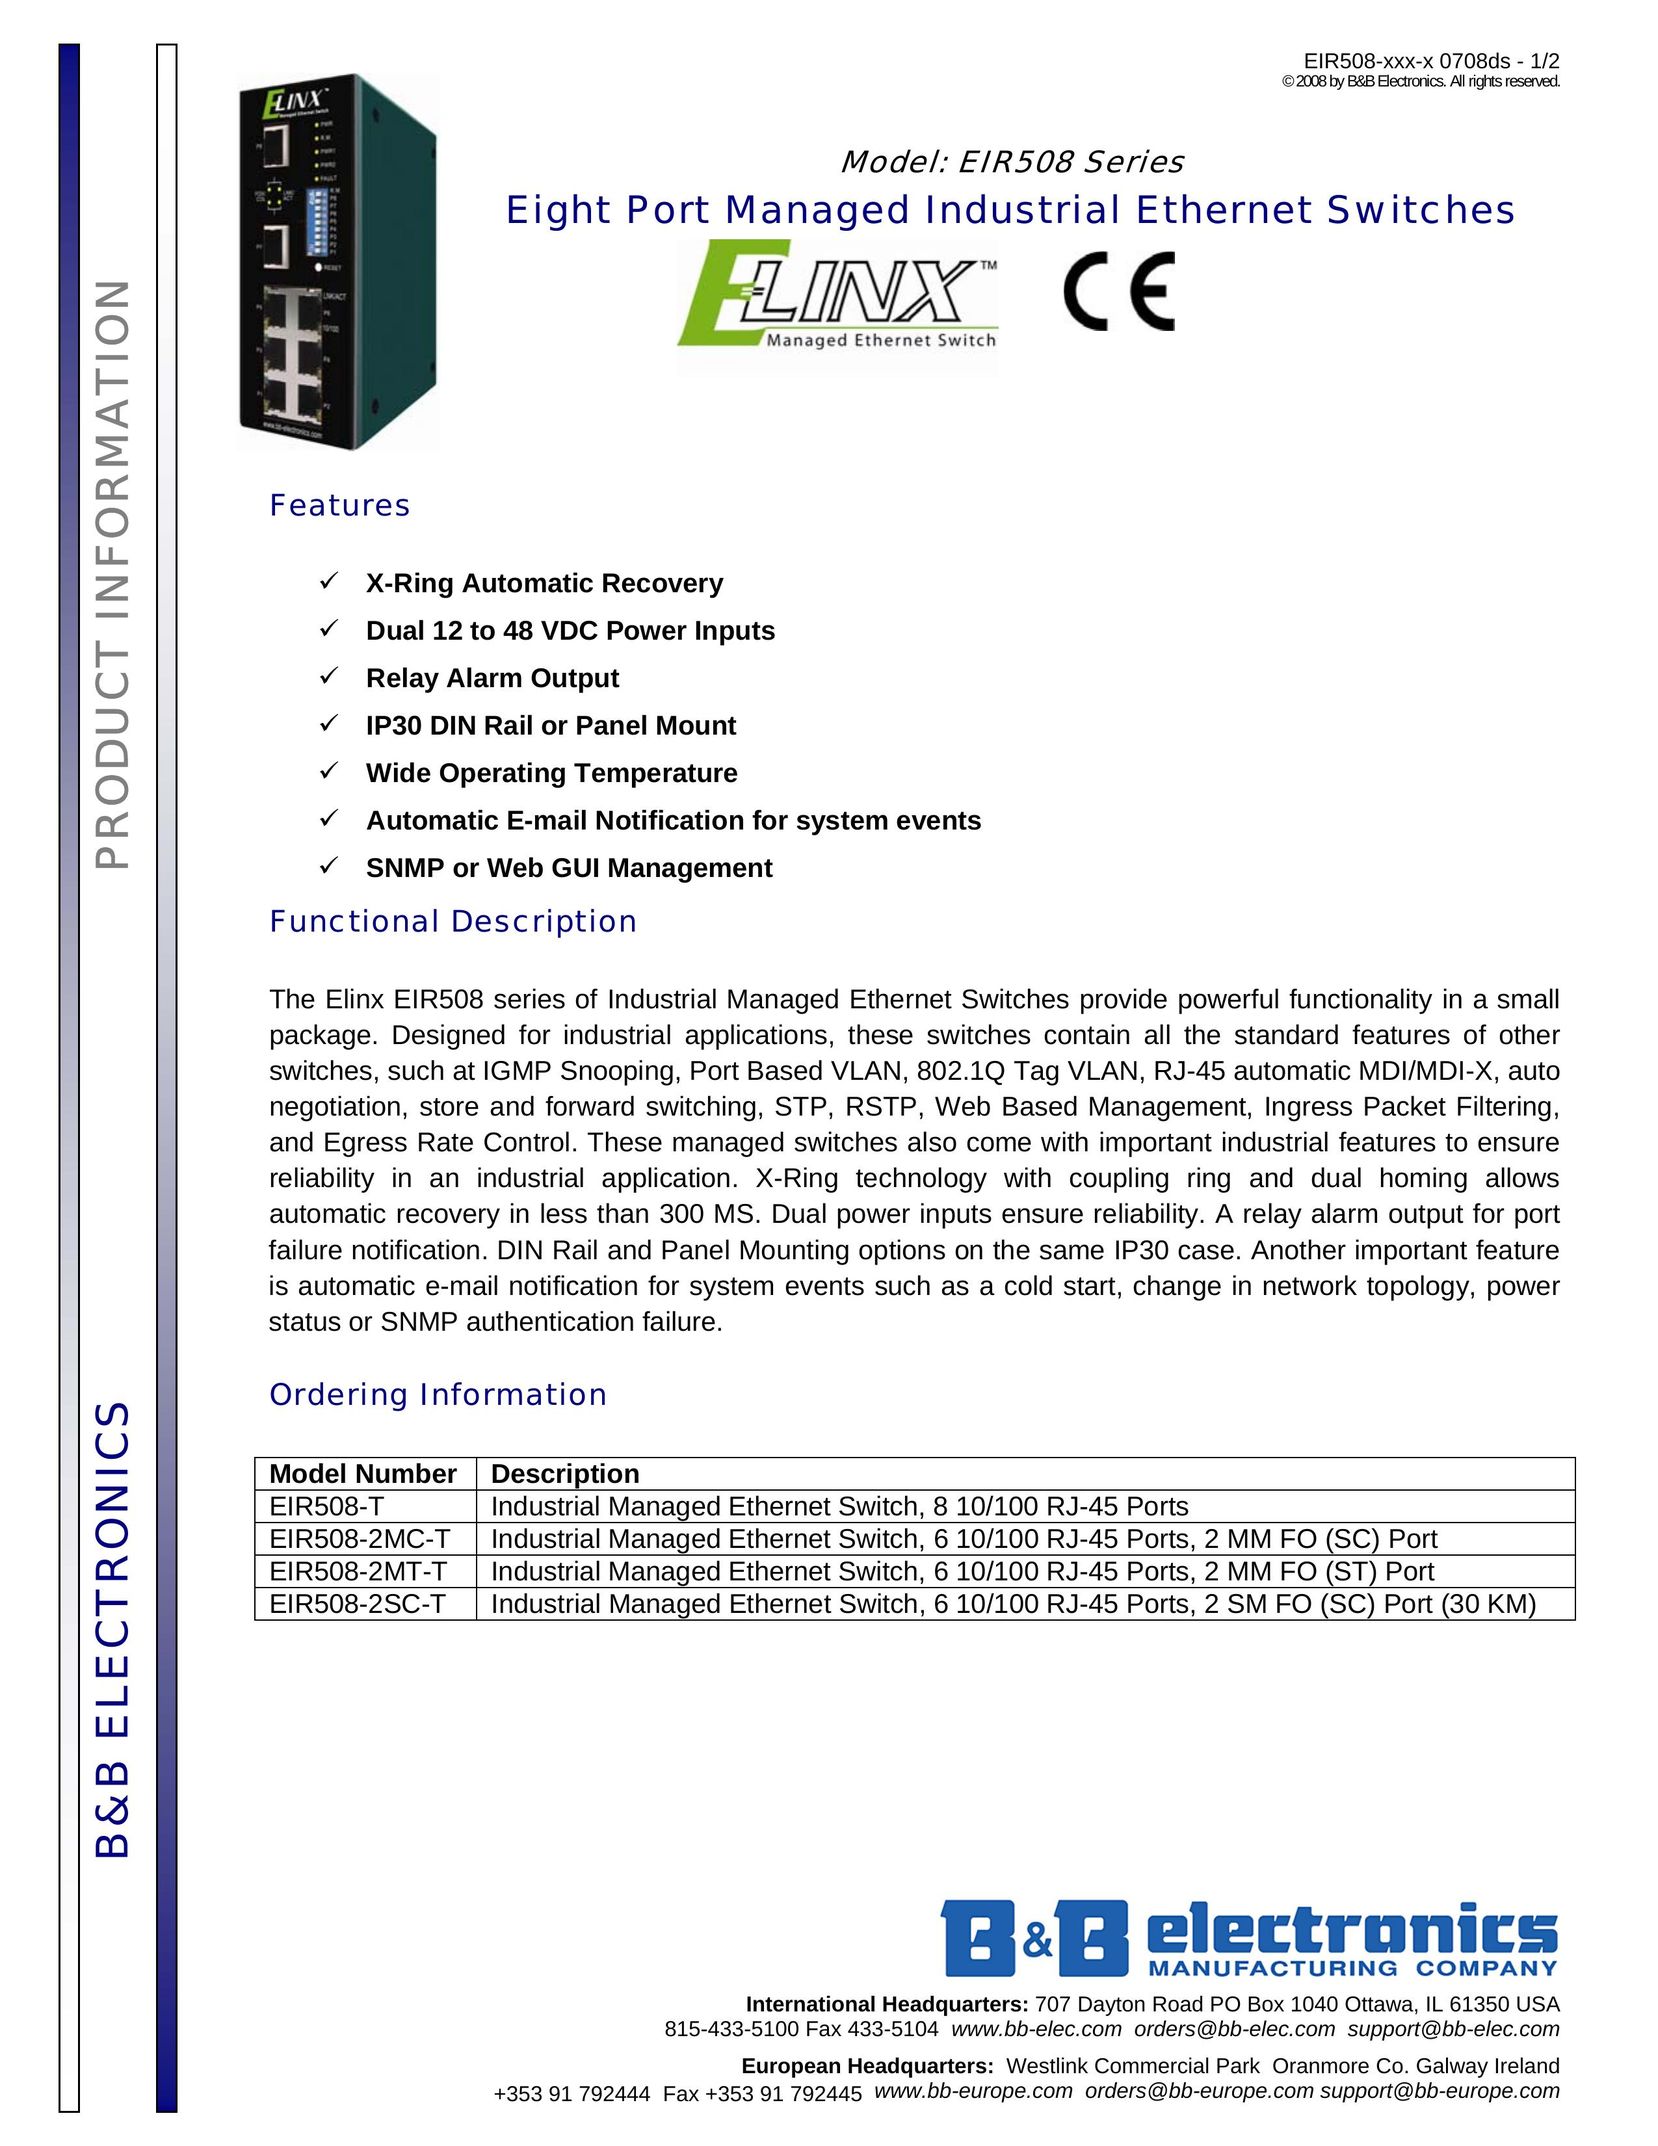 B&B Electronics EIR508-2SC-T Switch User Manual